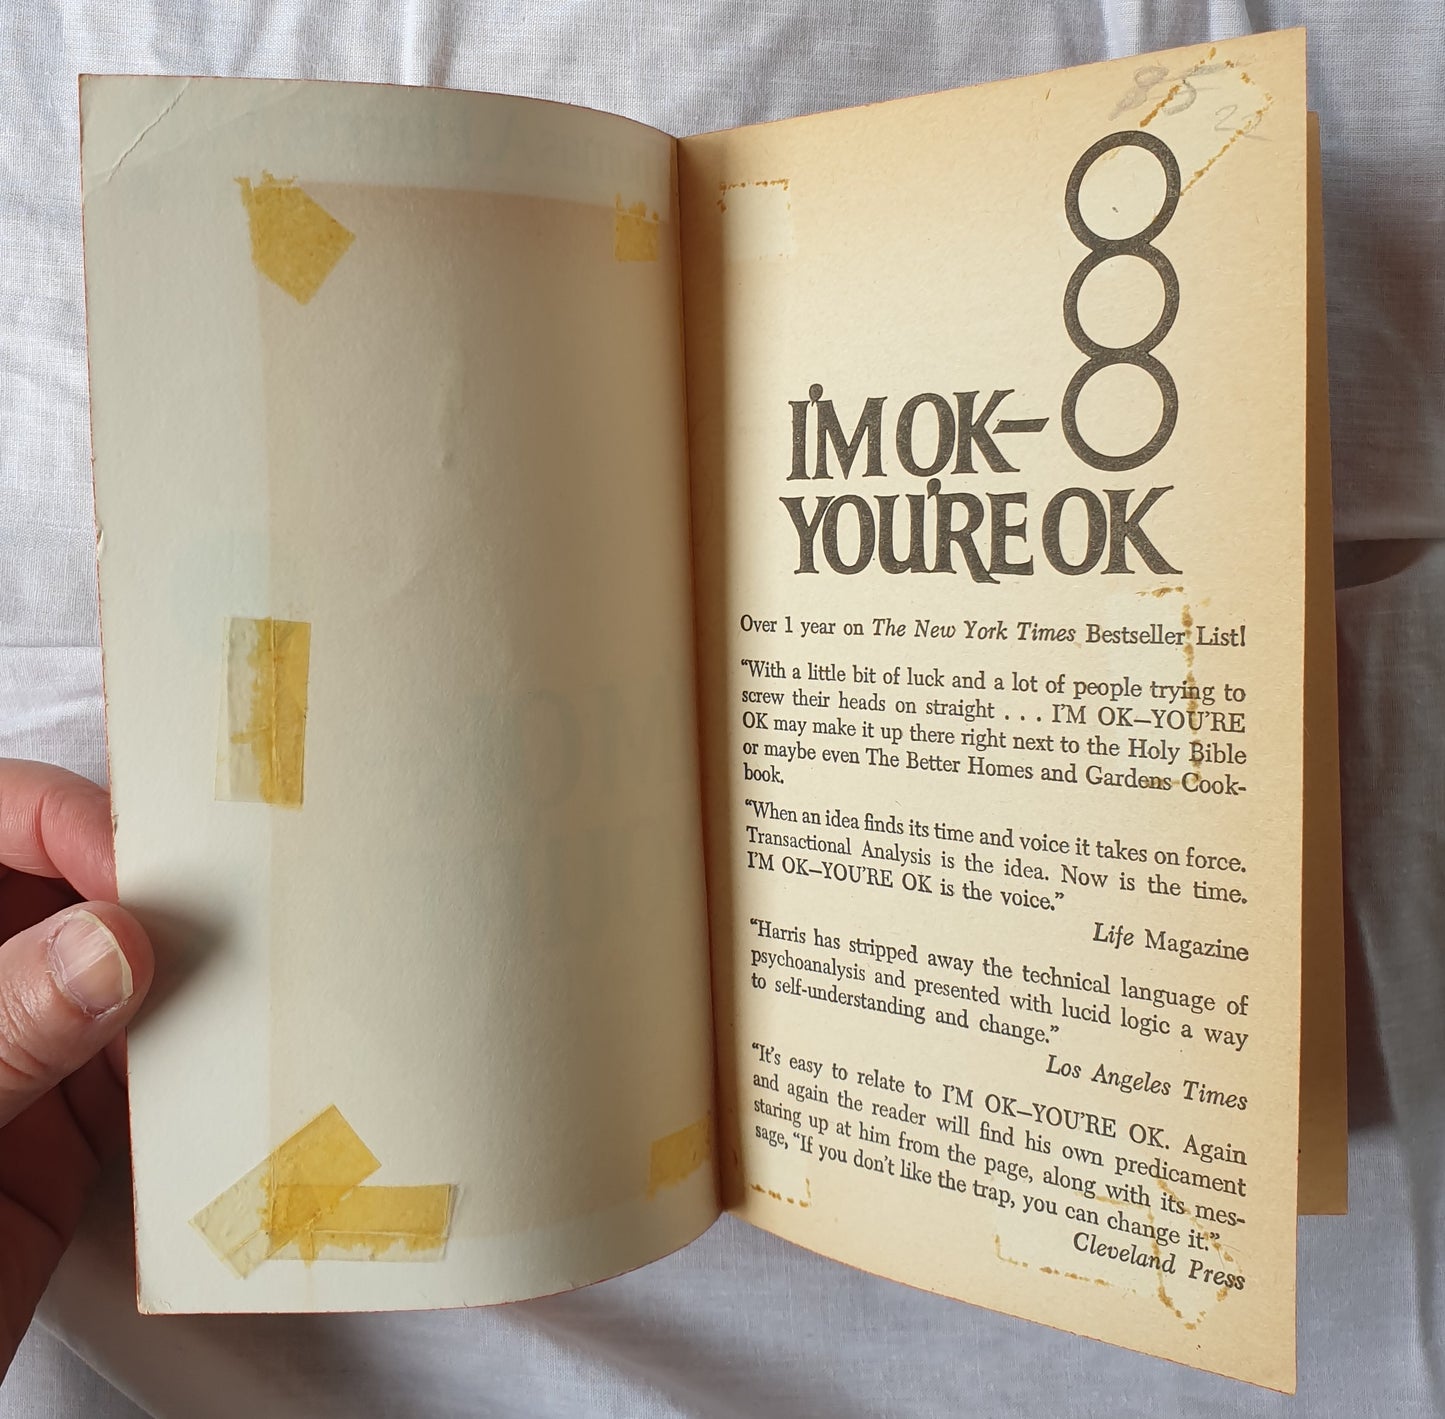 I’m OK – You’re OK by Thomas A. Harris